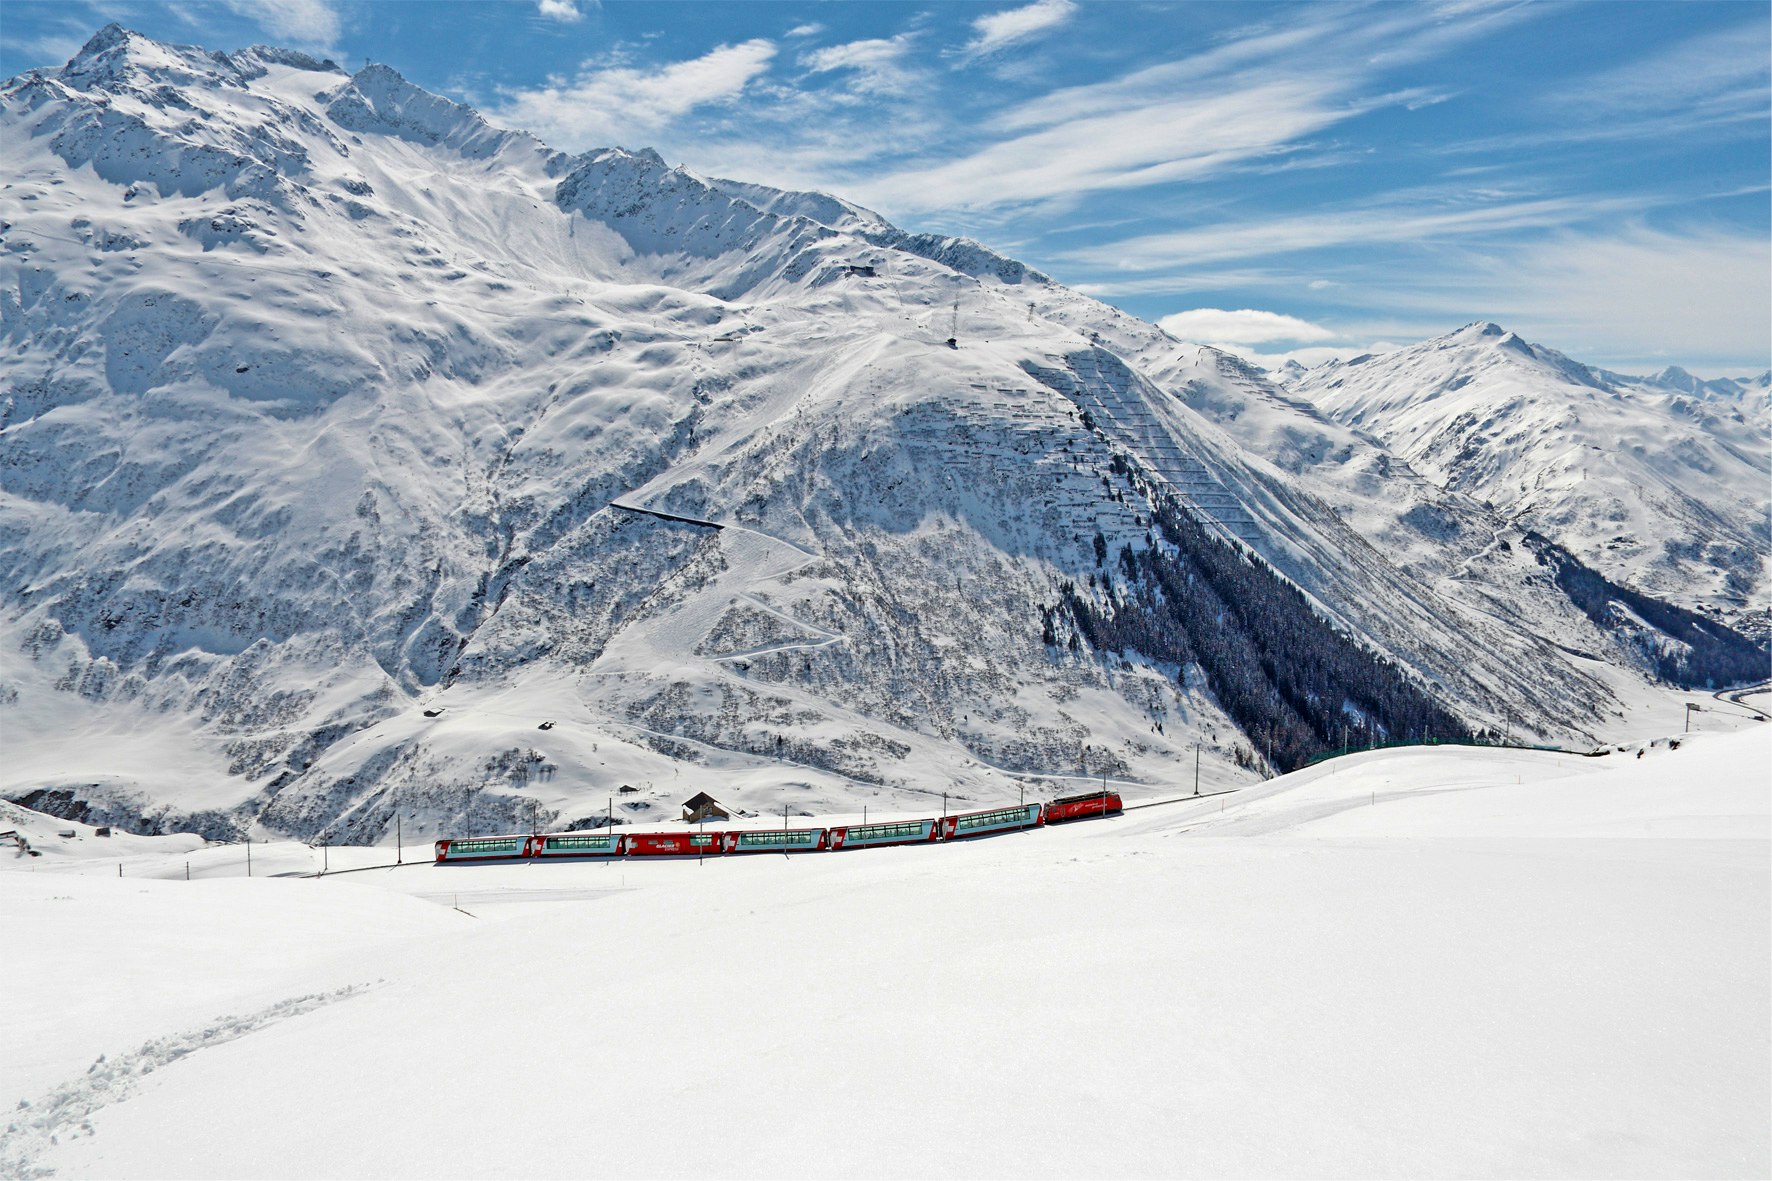 Glacier Express short trip with overnight stay in Zermatt